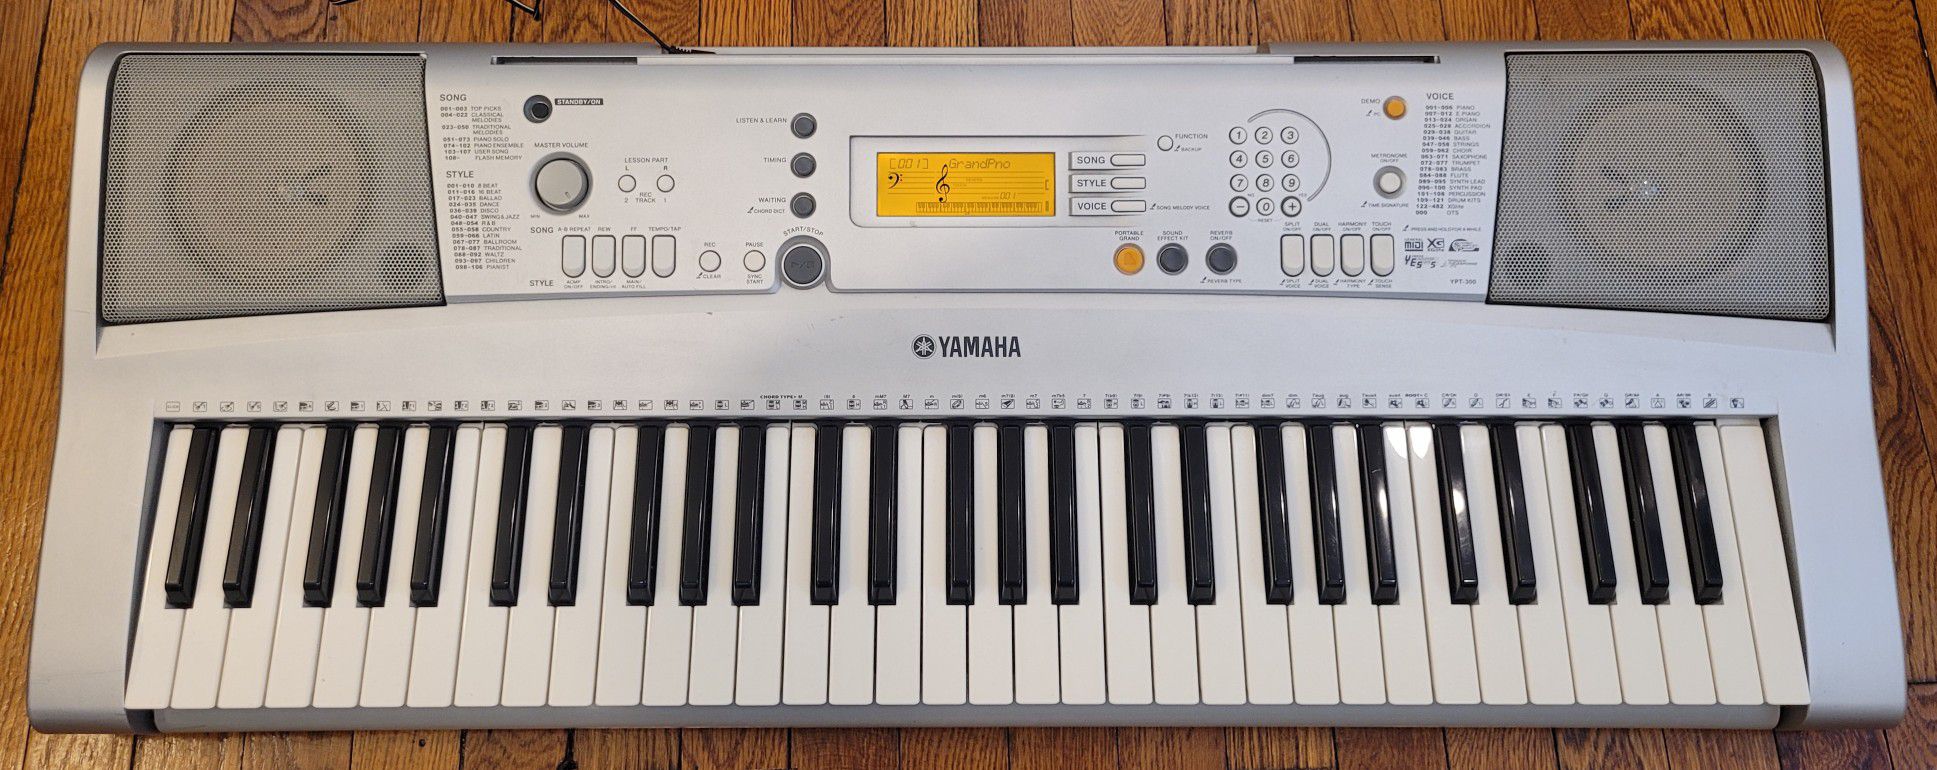 Yamaha Electronic Piano / Keyboard